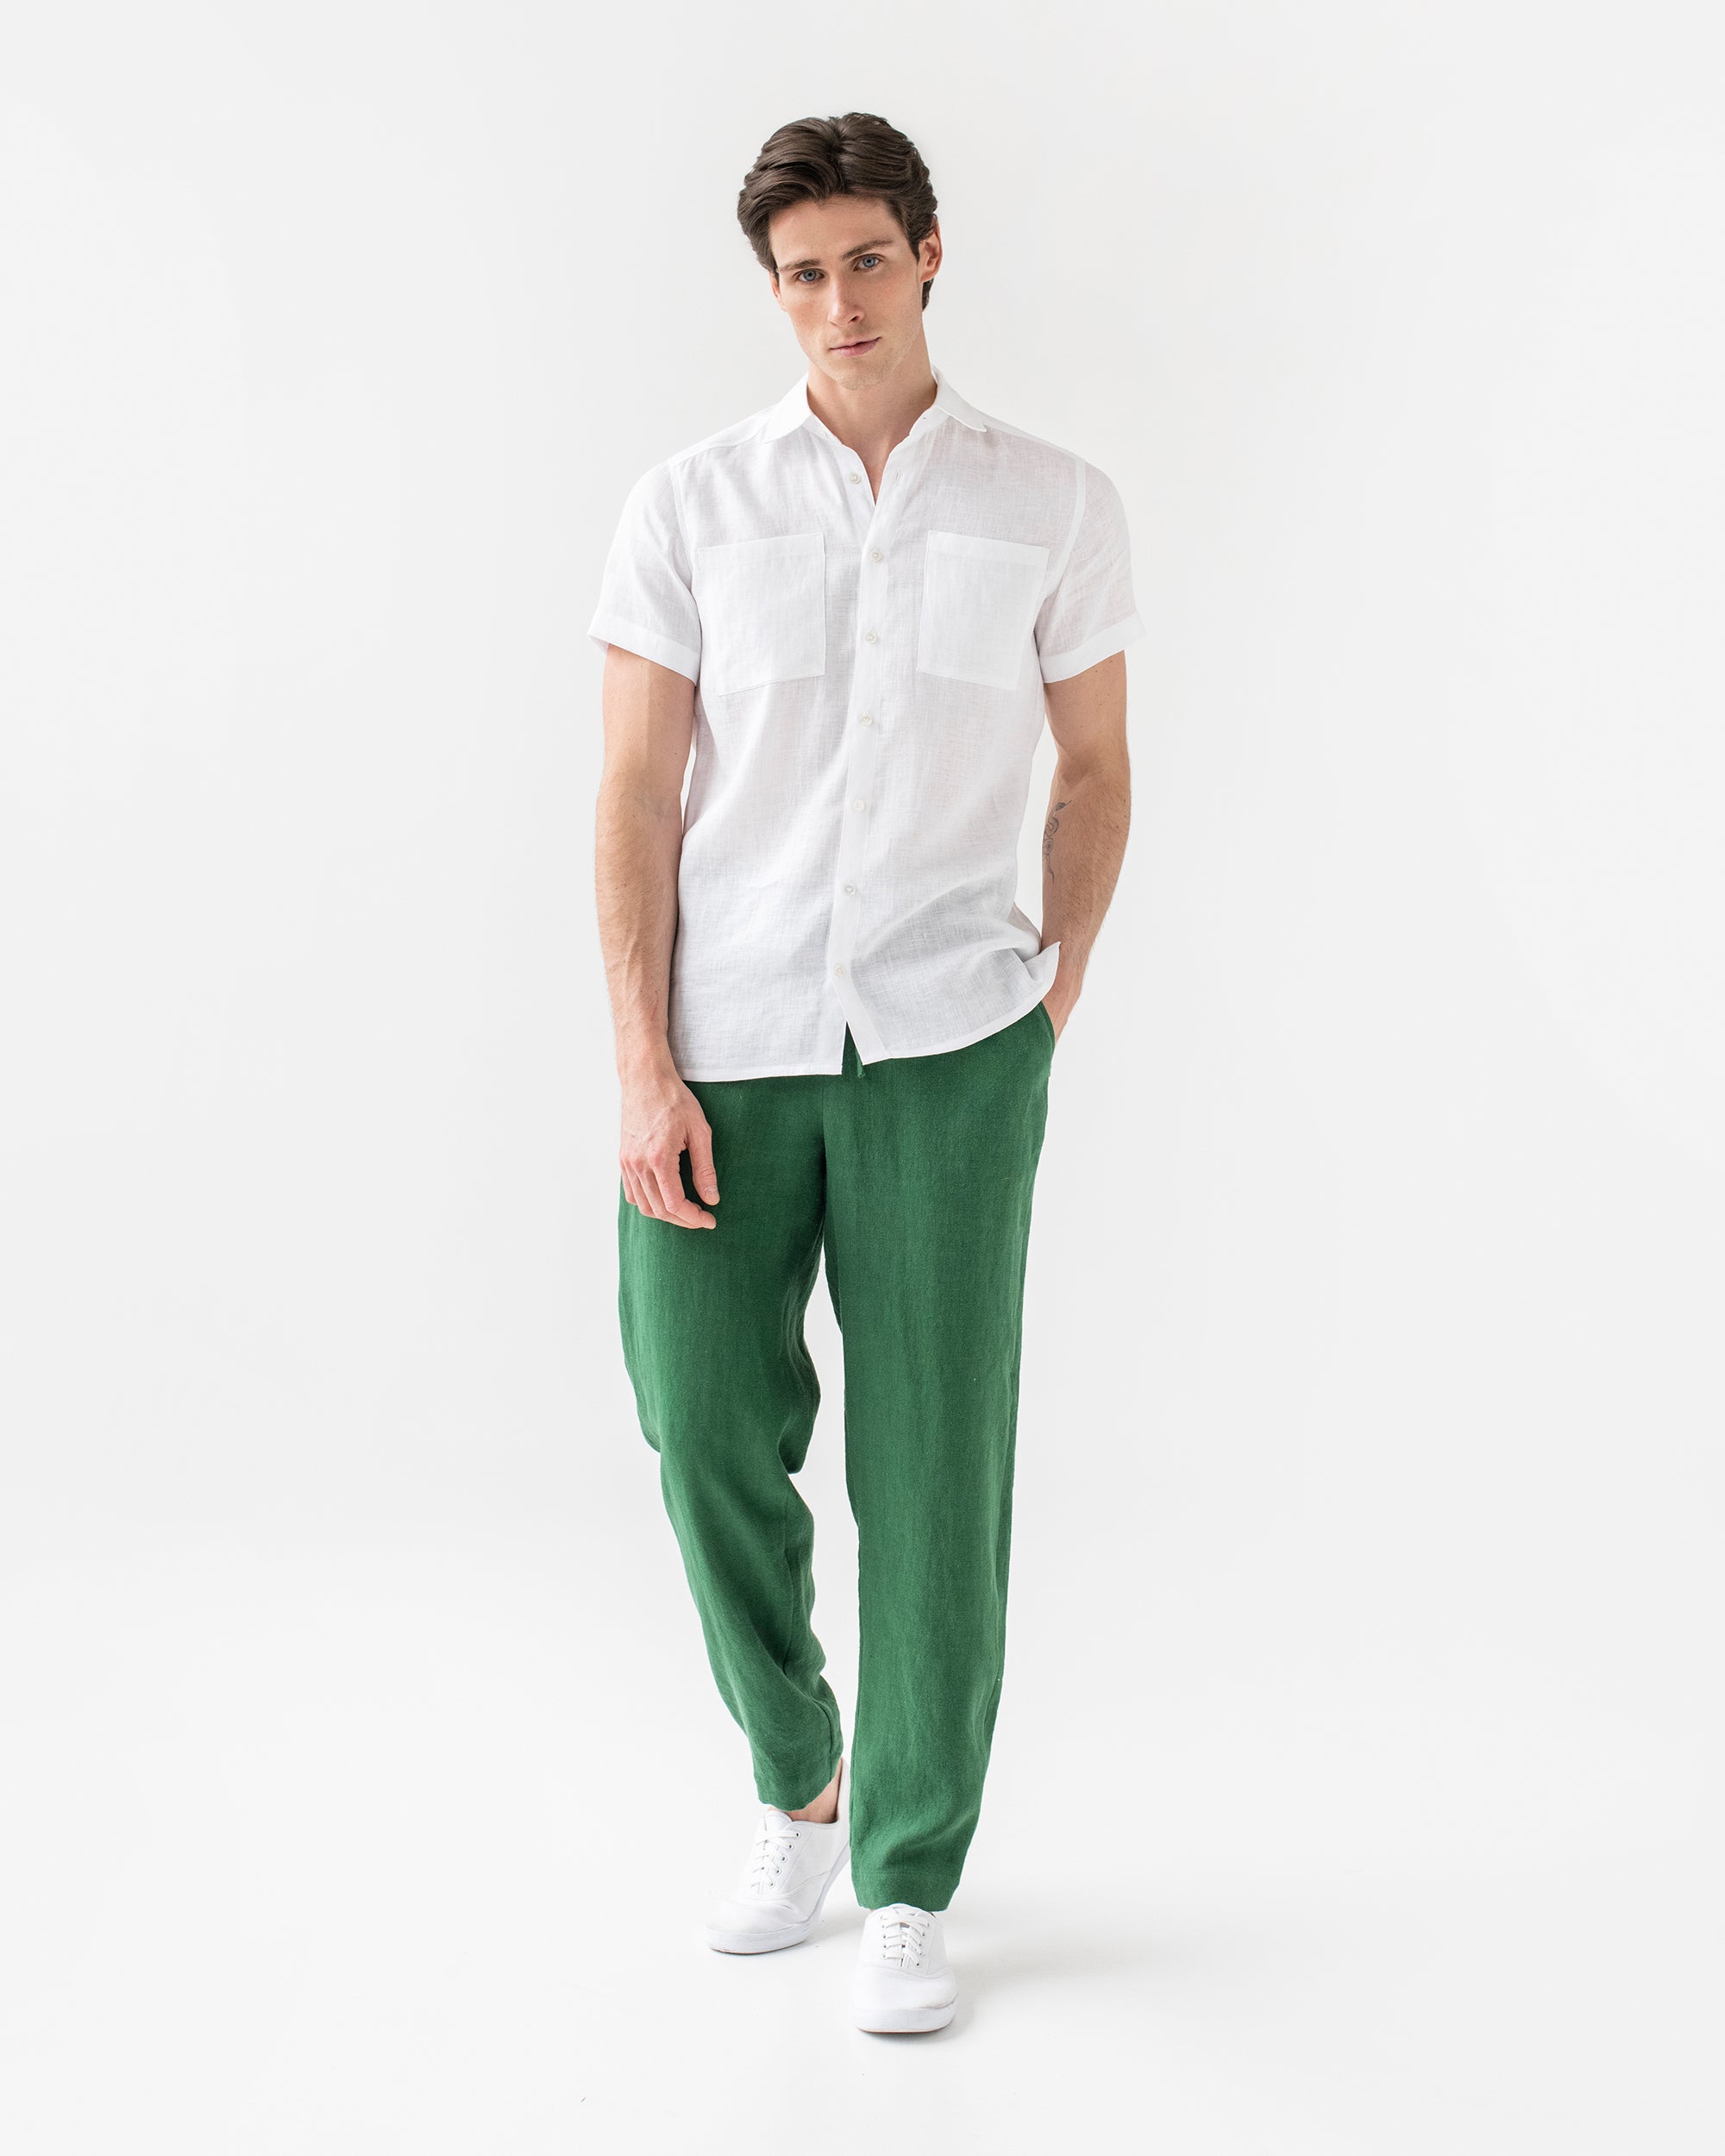 Linen Clothing for Men  Mens linen pants, Linen shirt men, Mens